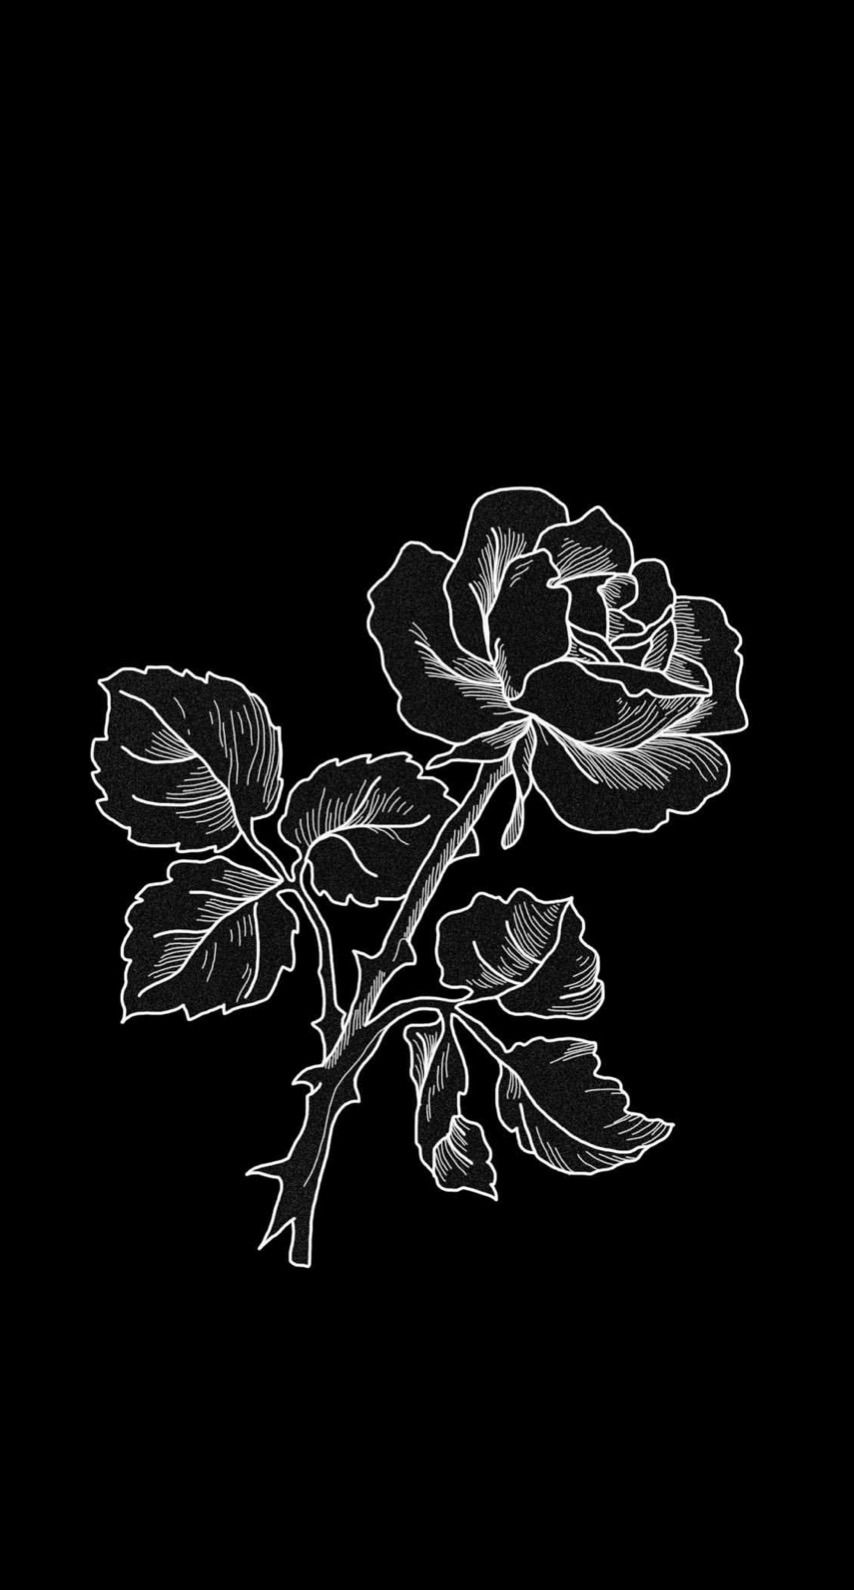 Black and White Rose Drawing Wallpaper Free Black and White Rose Drawing Background